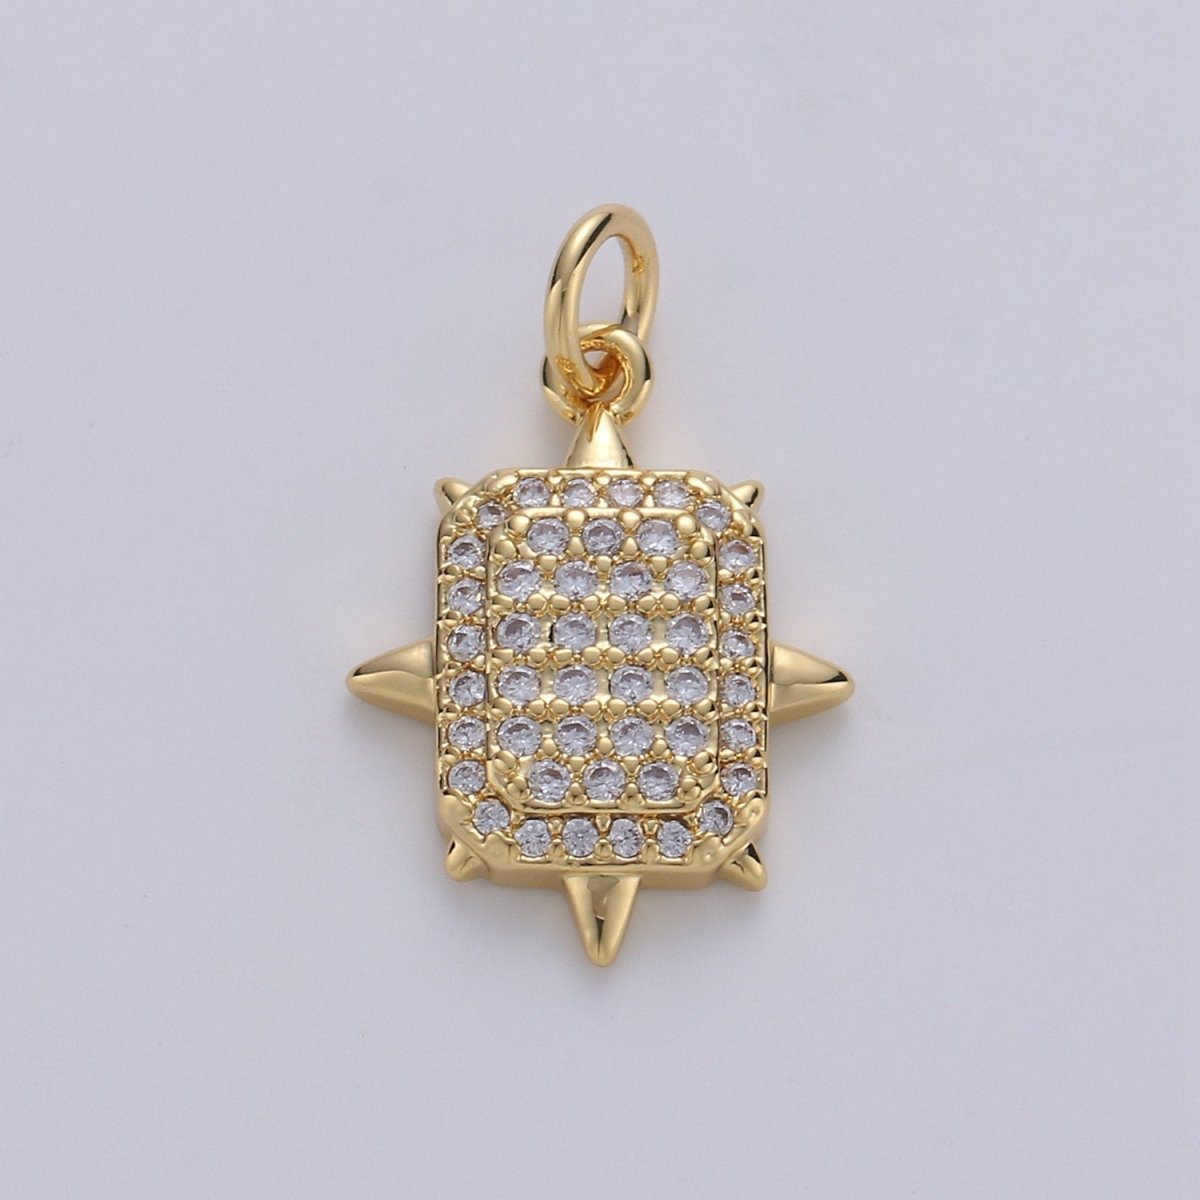 Gold Square Stud Charm, Micro Pave Cz Geometric Pendant, 20x14mm geometric Square charm for necklace earring bracelet supply D-527 D-528 - DLUXCA